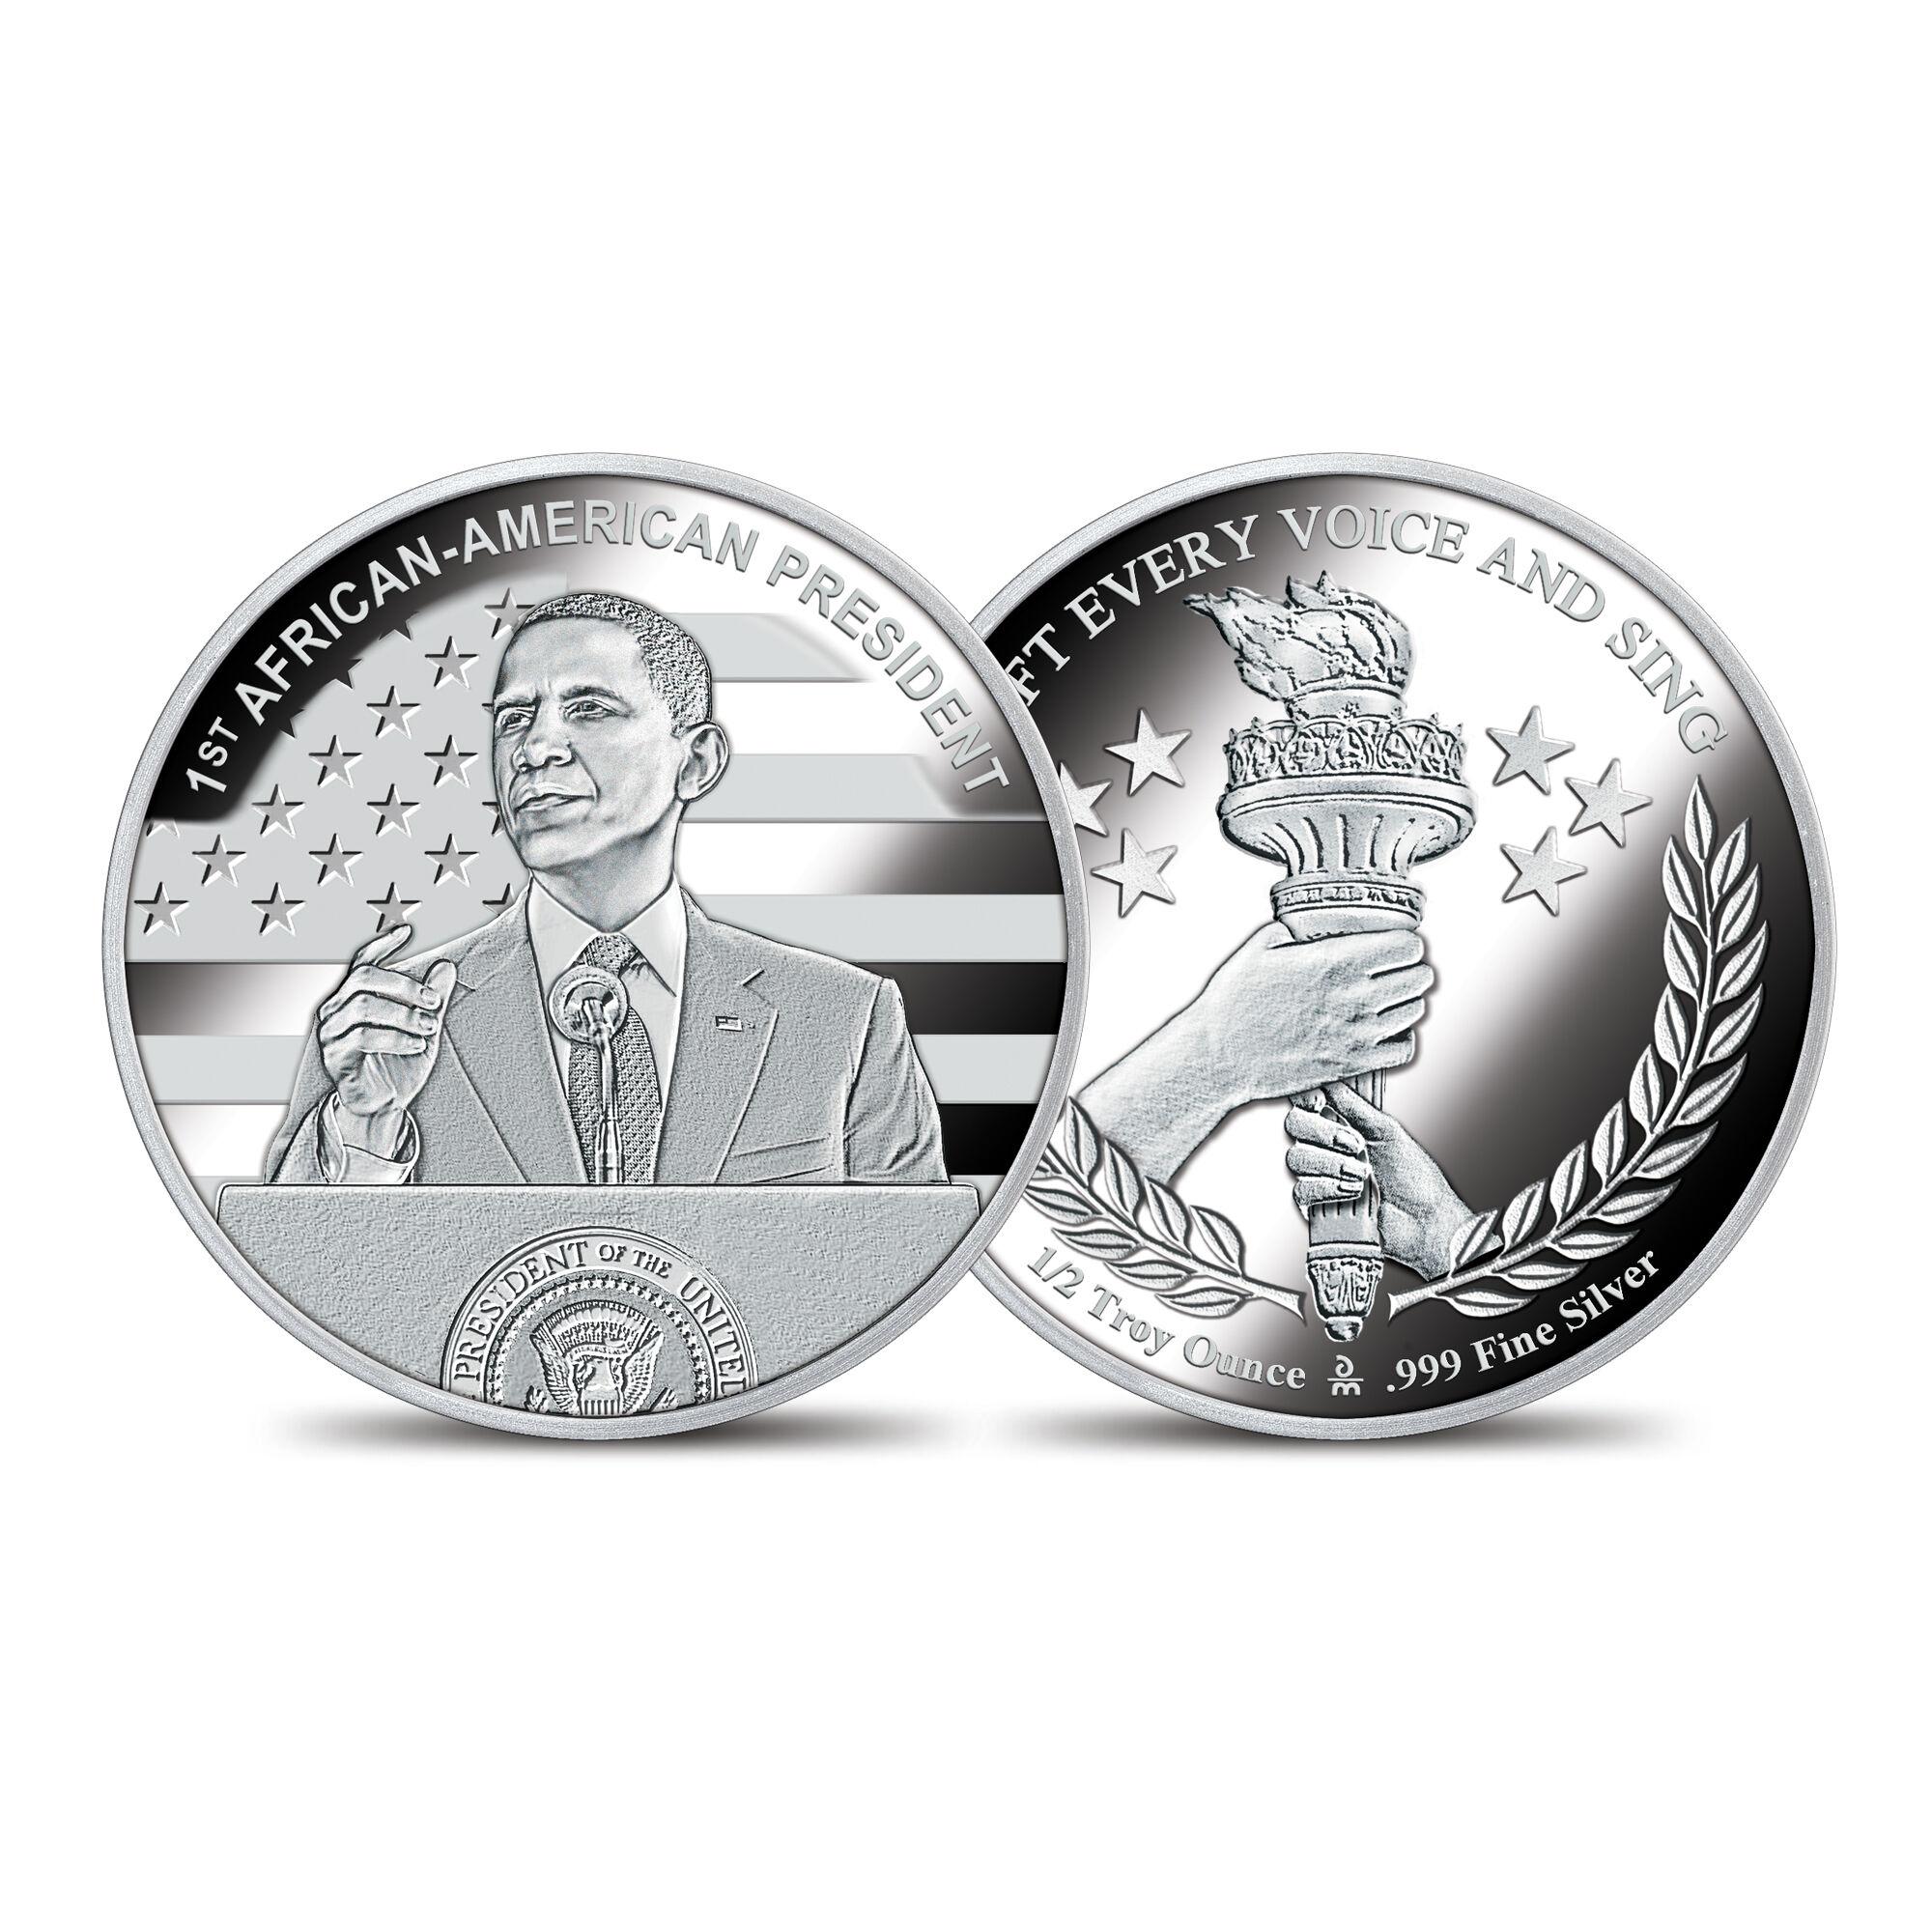 The American Civil Rights Silver Bullion Commemoratives 10123 0019 d AframPresidentcomemmorative